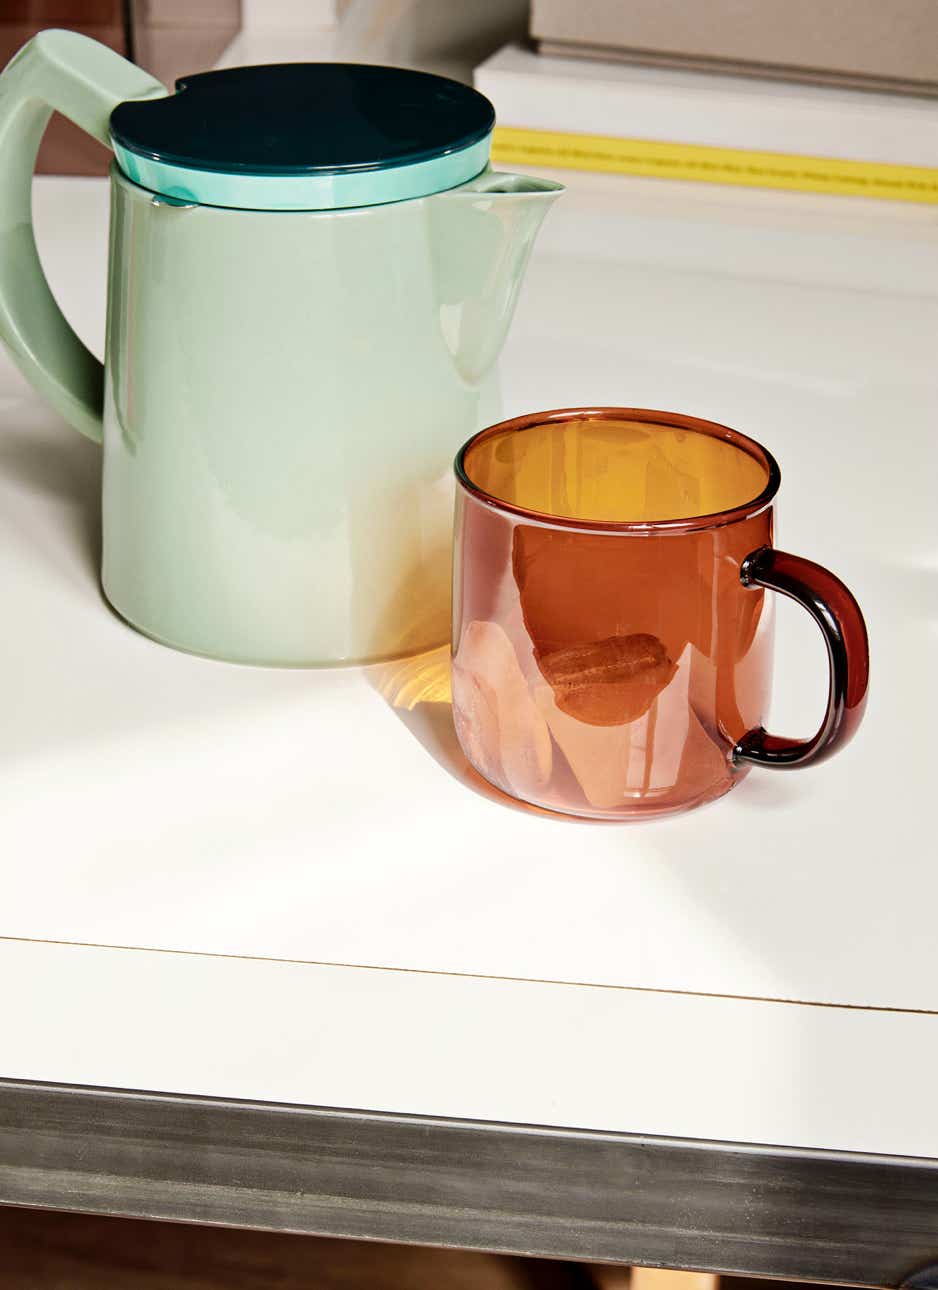 Mugs, Tasses et Pots Borosilicate